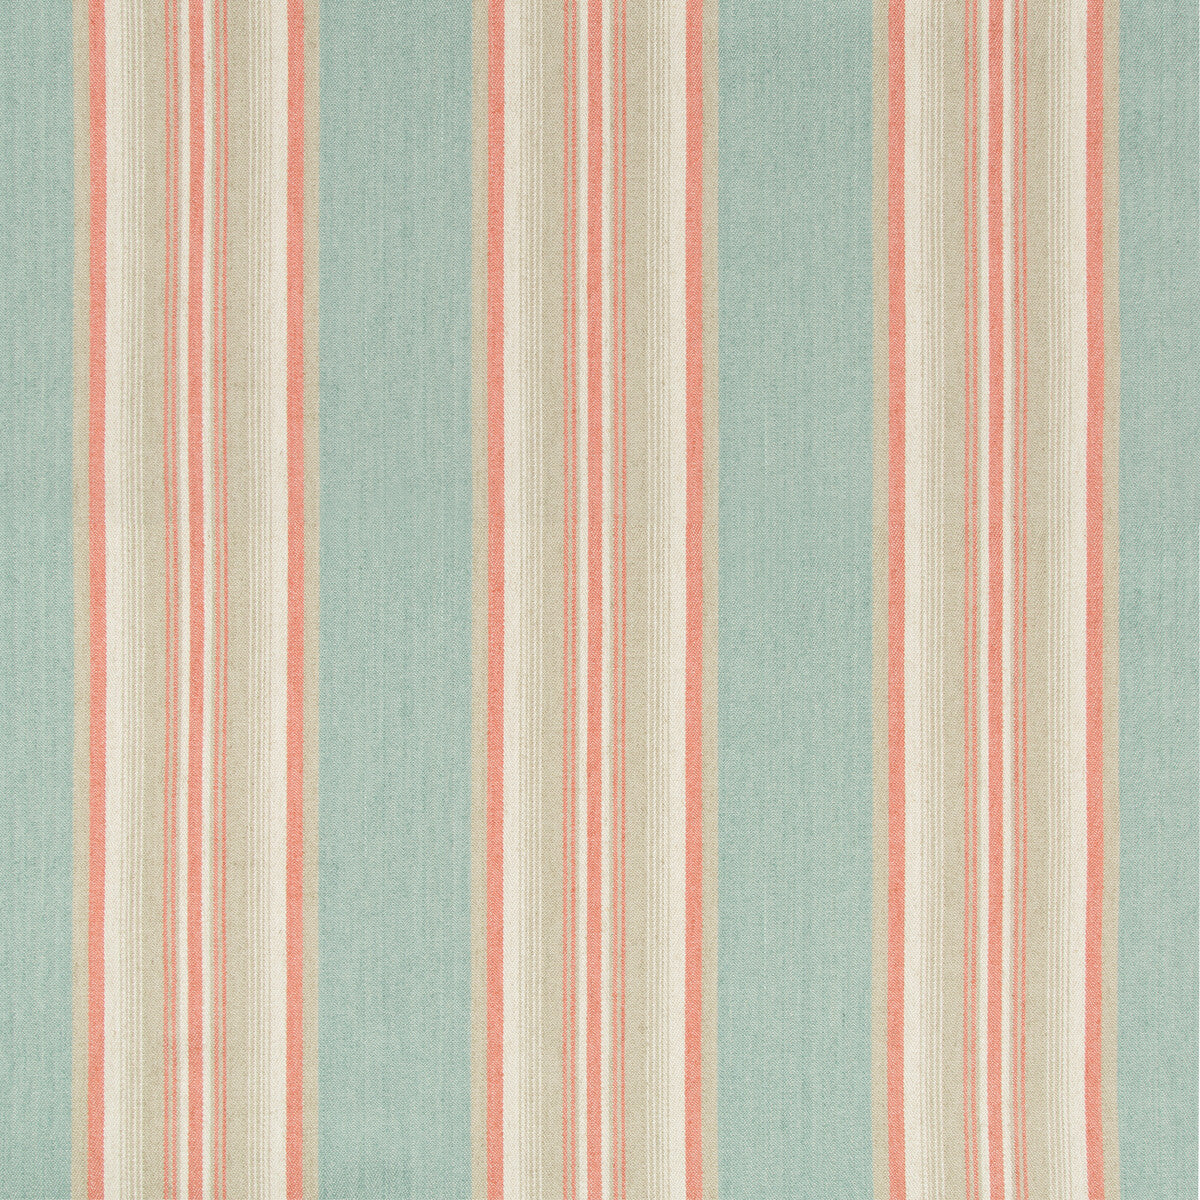 Lodeve Ticking fabric in capri color - pattern 35169.312.0 - by Kravet Design